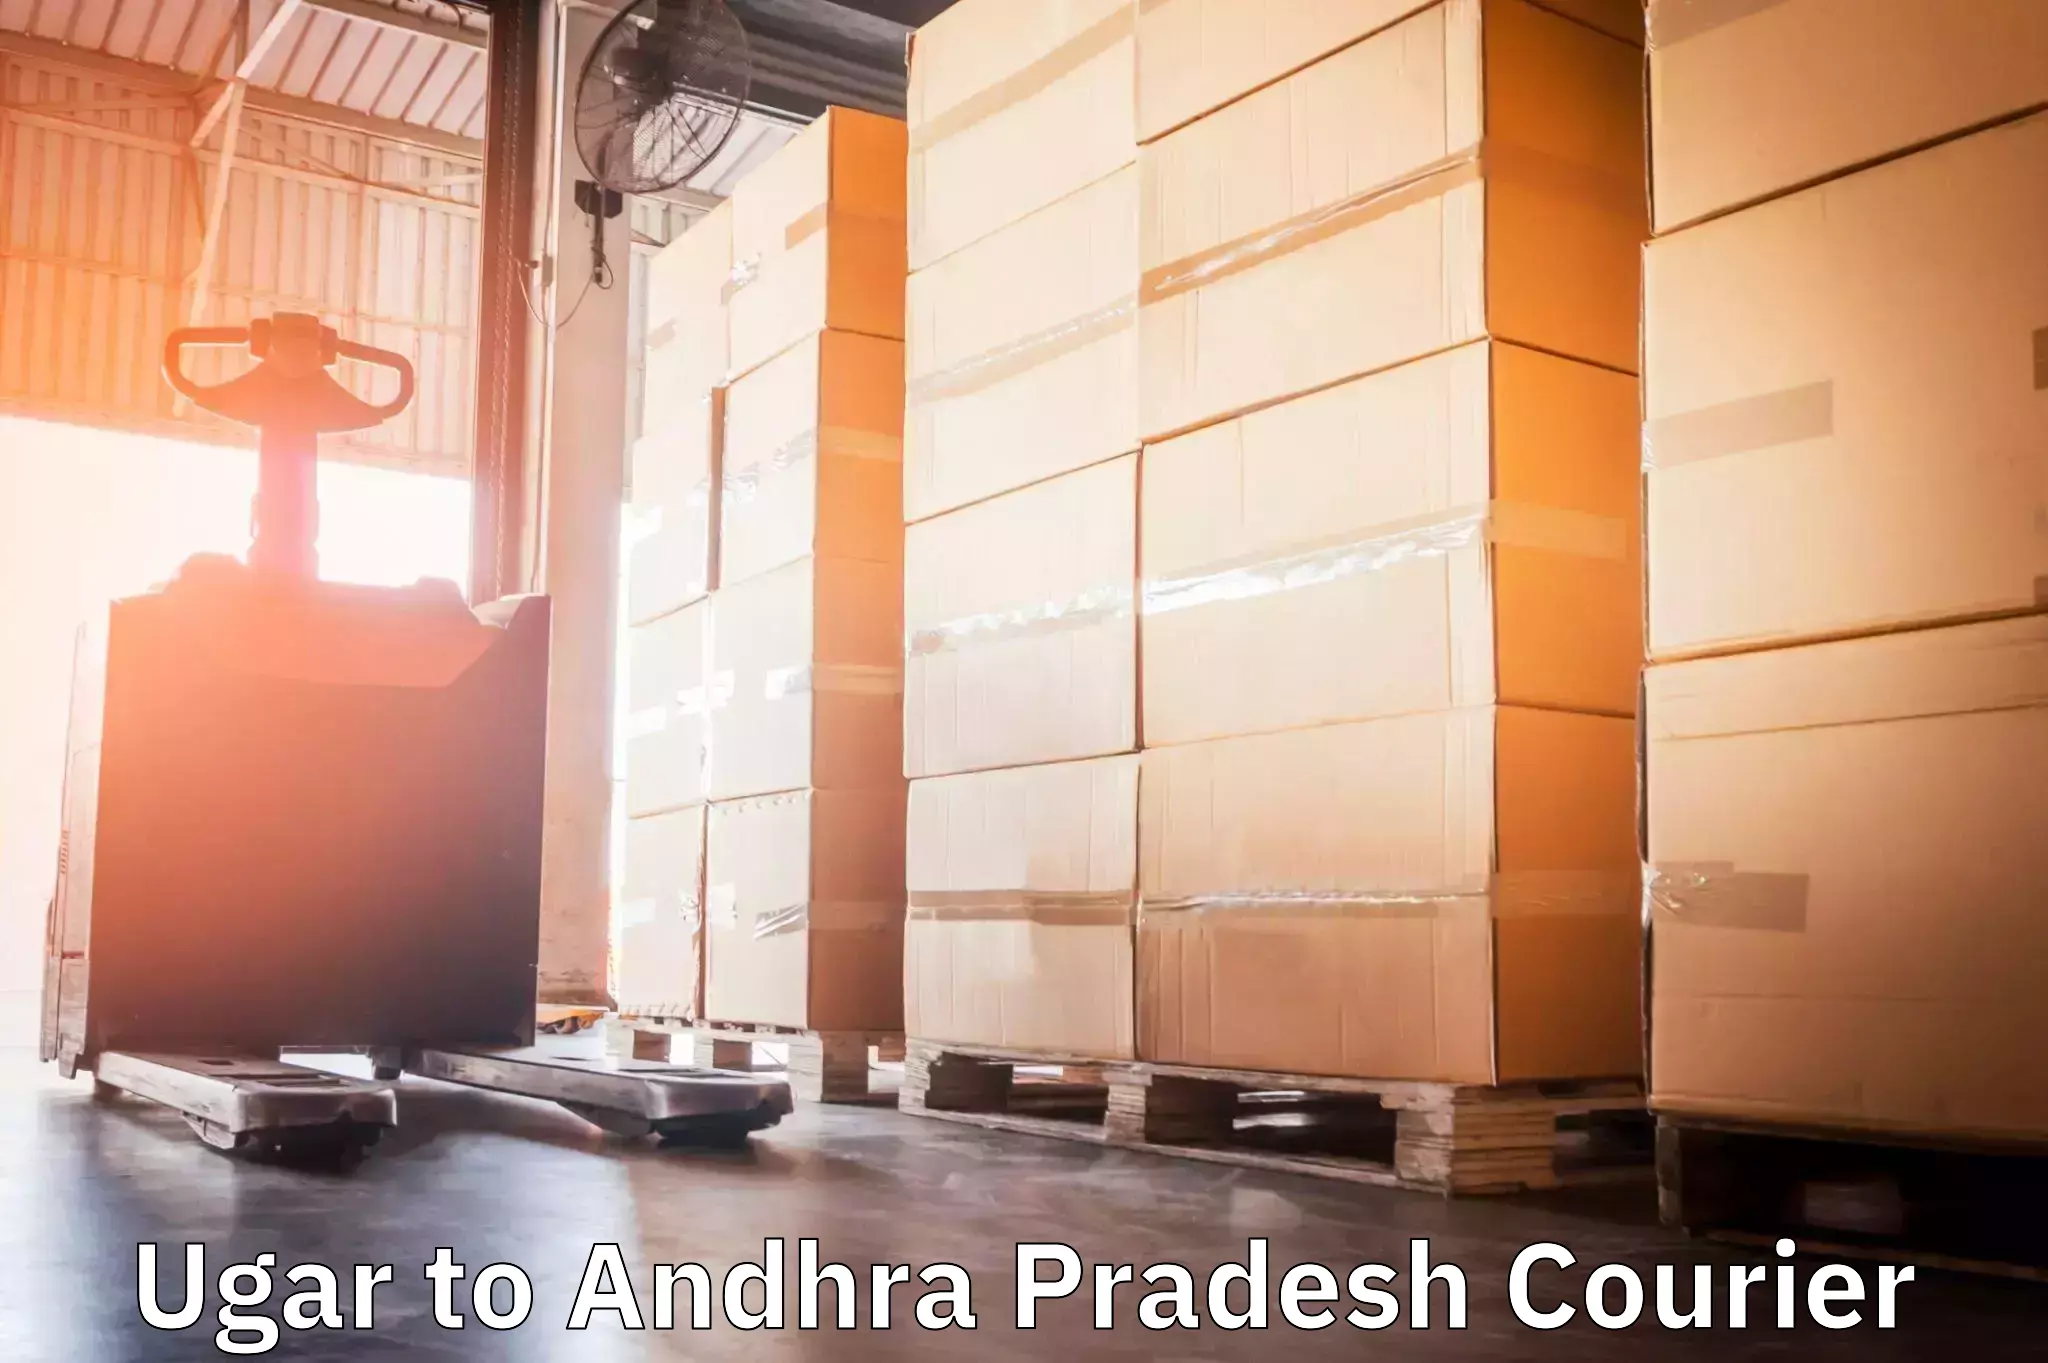 Courier service innovation Ugar to Andhra Pradesh